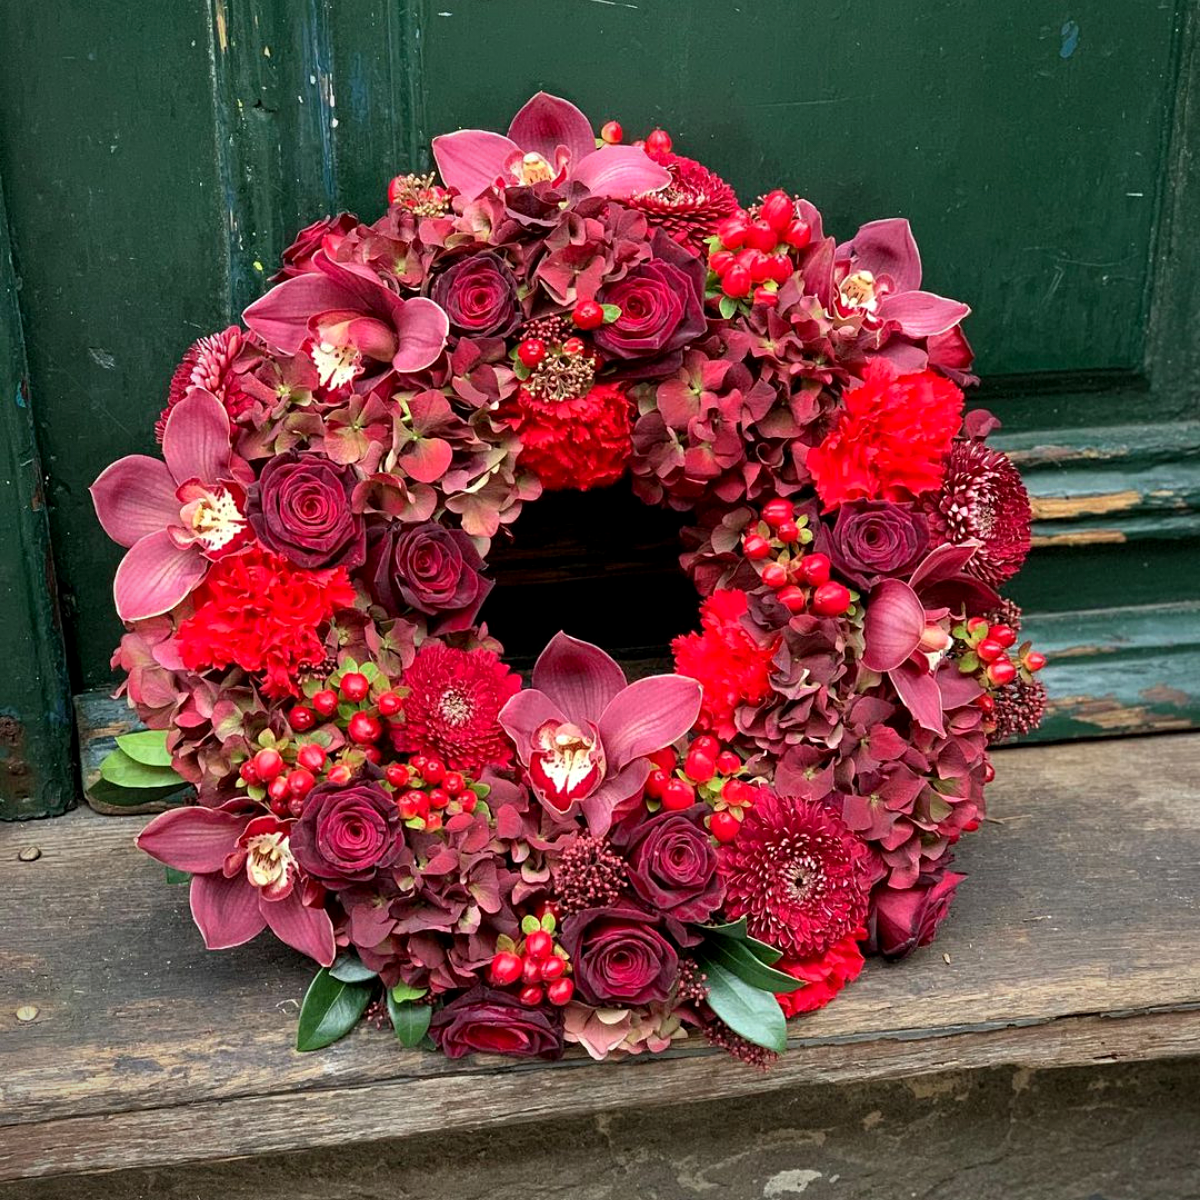 15-valentines-wreaths-that-celebrate-love-featured